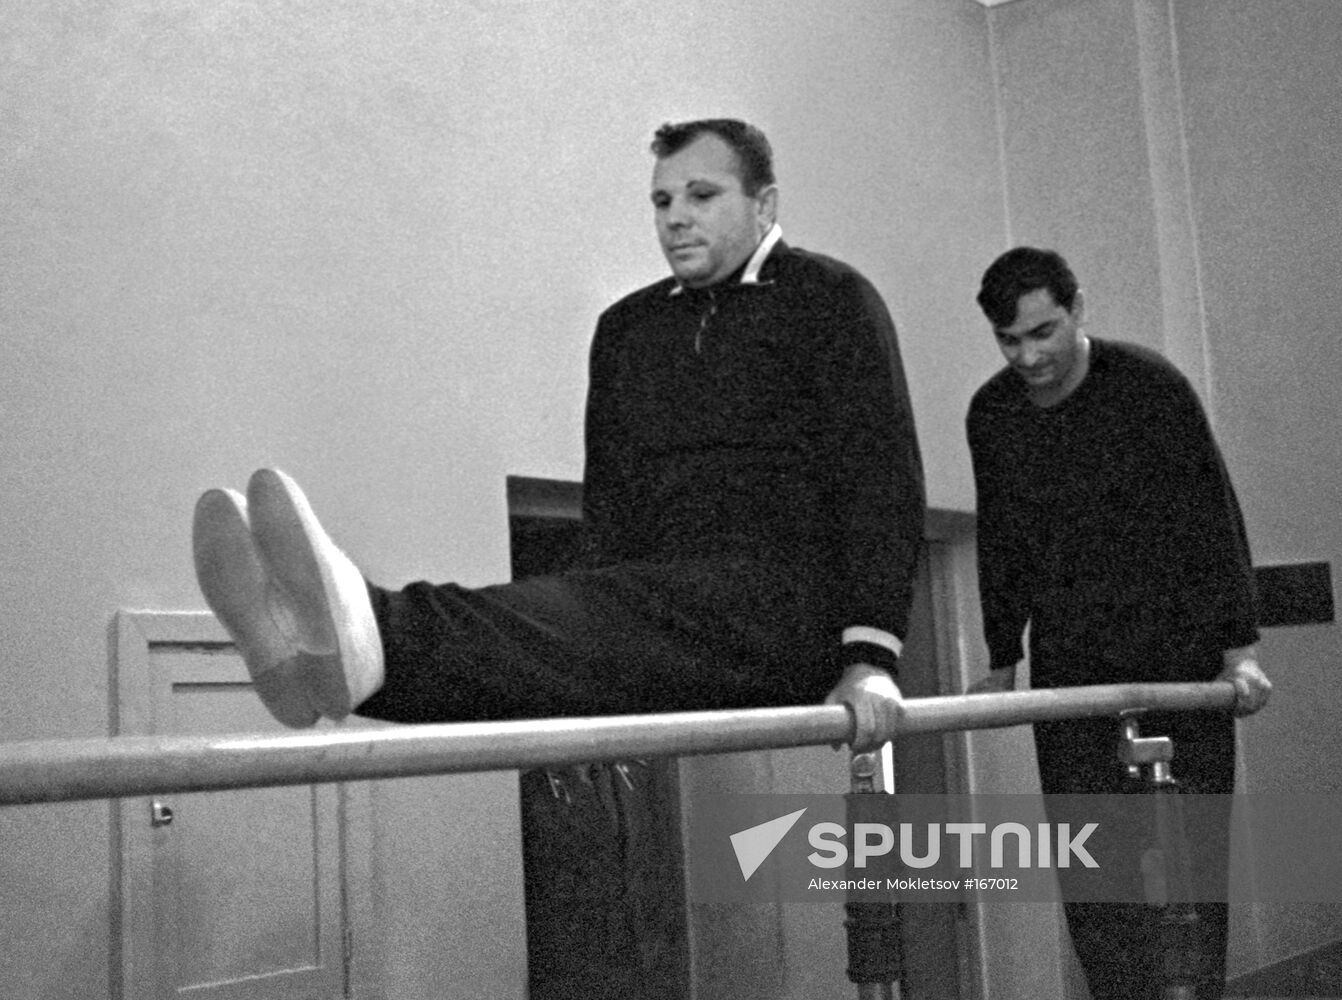 Cosmonauts Yuri Gagarin and Valery Bykovsky in the gym